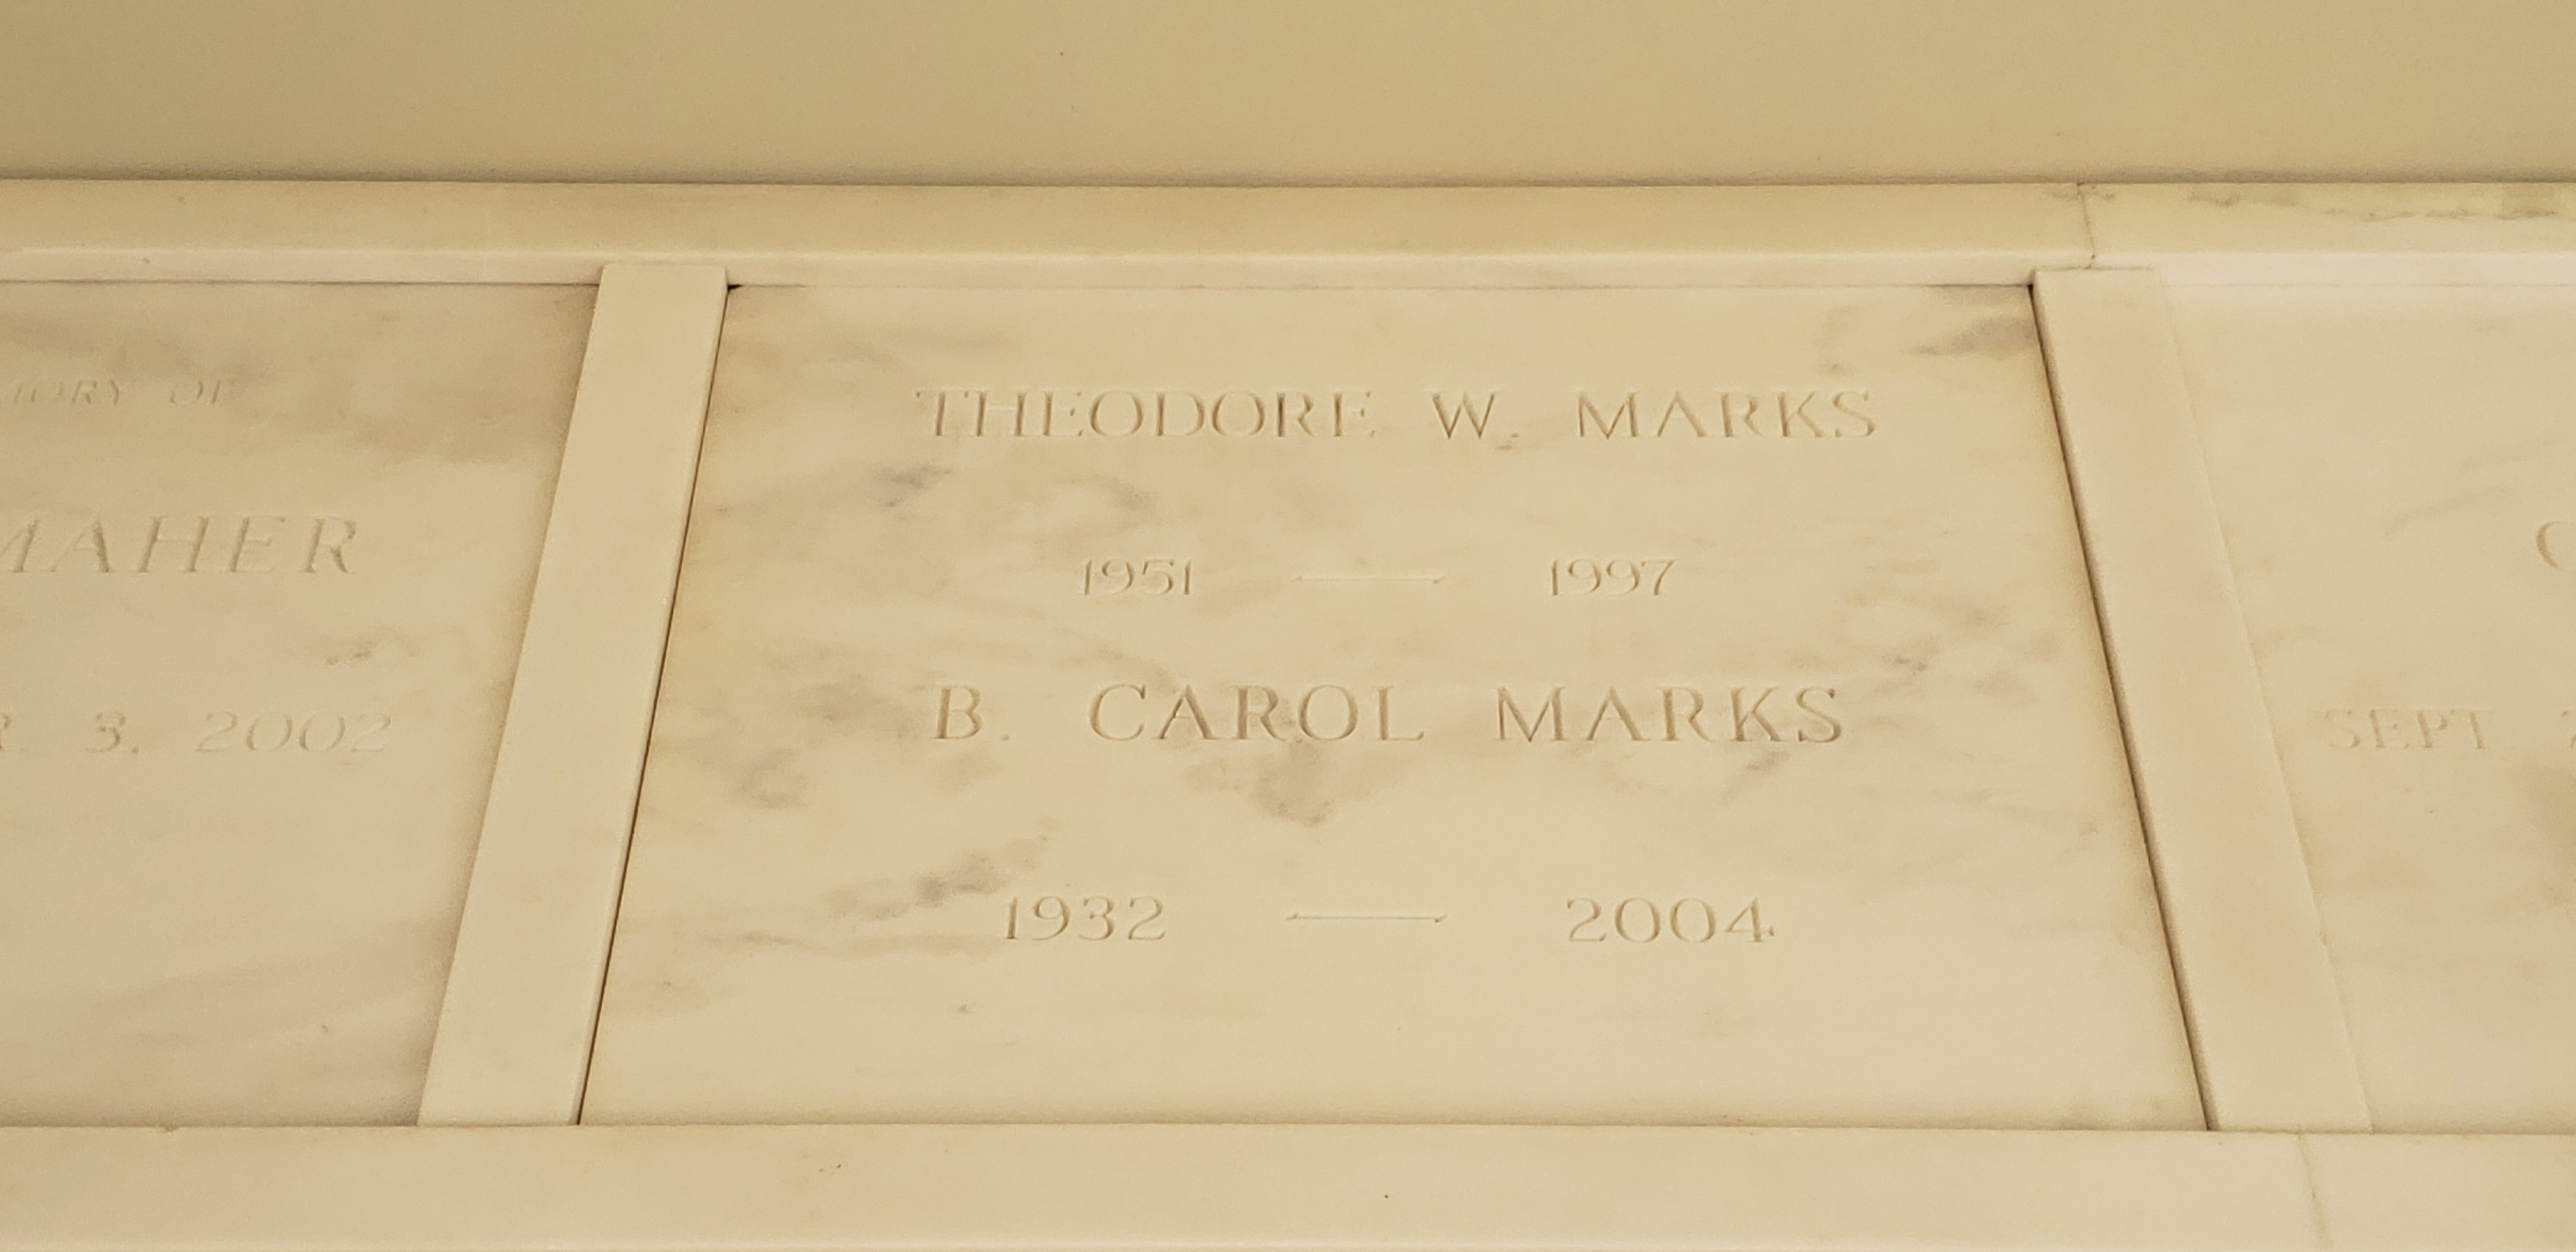 B Carol Marks